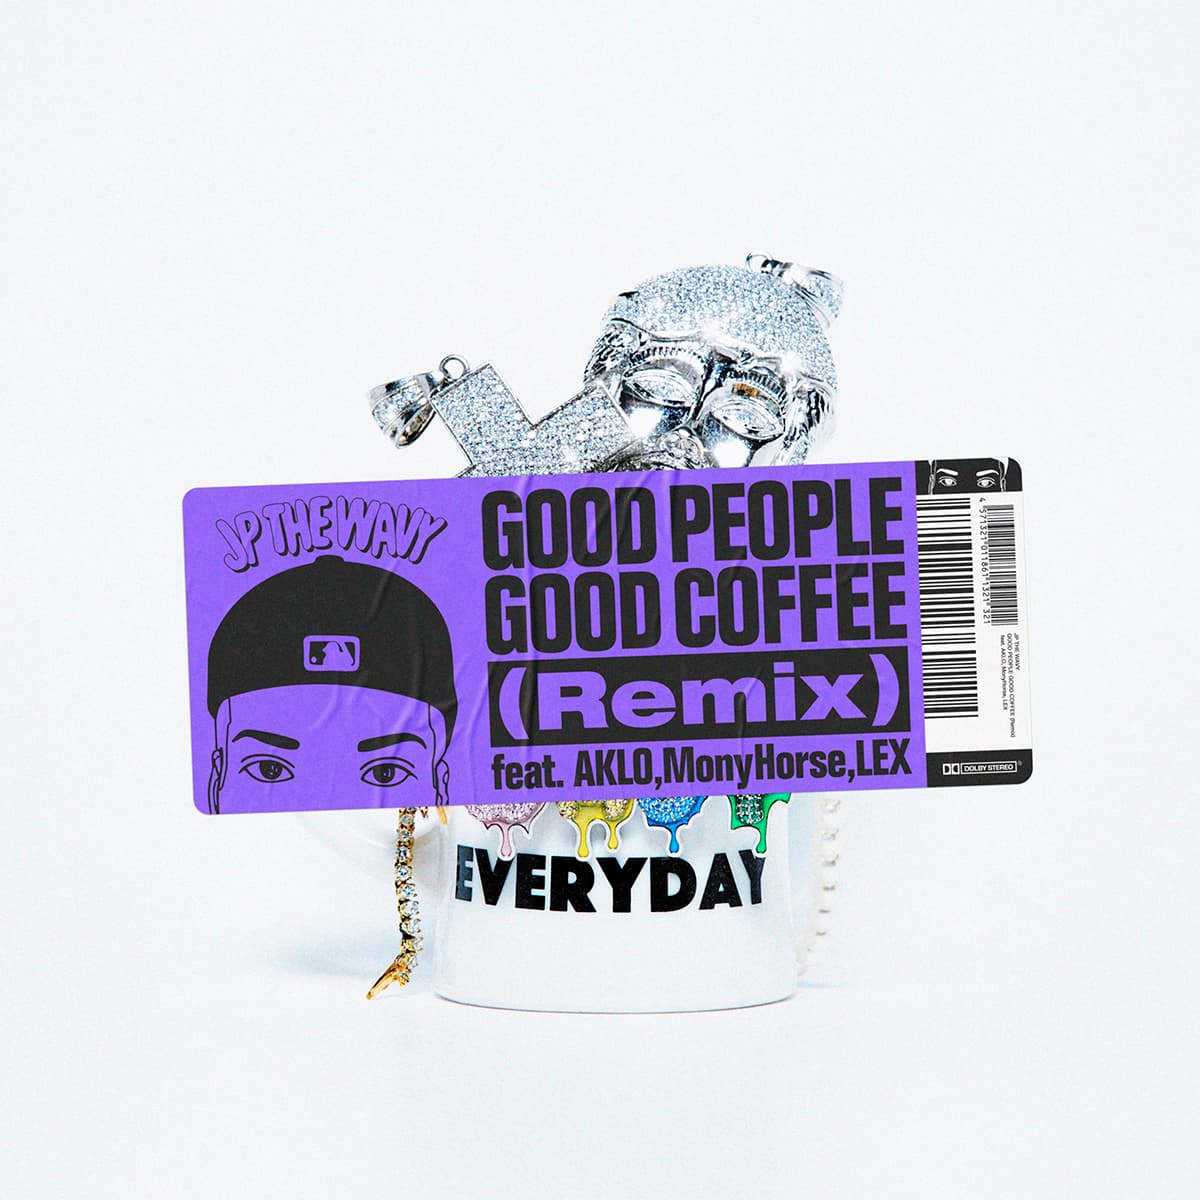 JP THE WAVY Digital Single “GOOD PEOPLE GOOD COFFEE (Remix) feat. AKLO, MonyHorse, LEX” Release